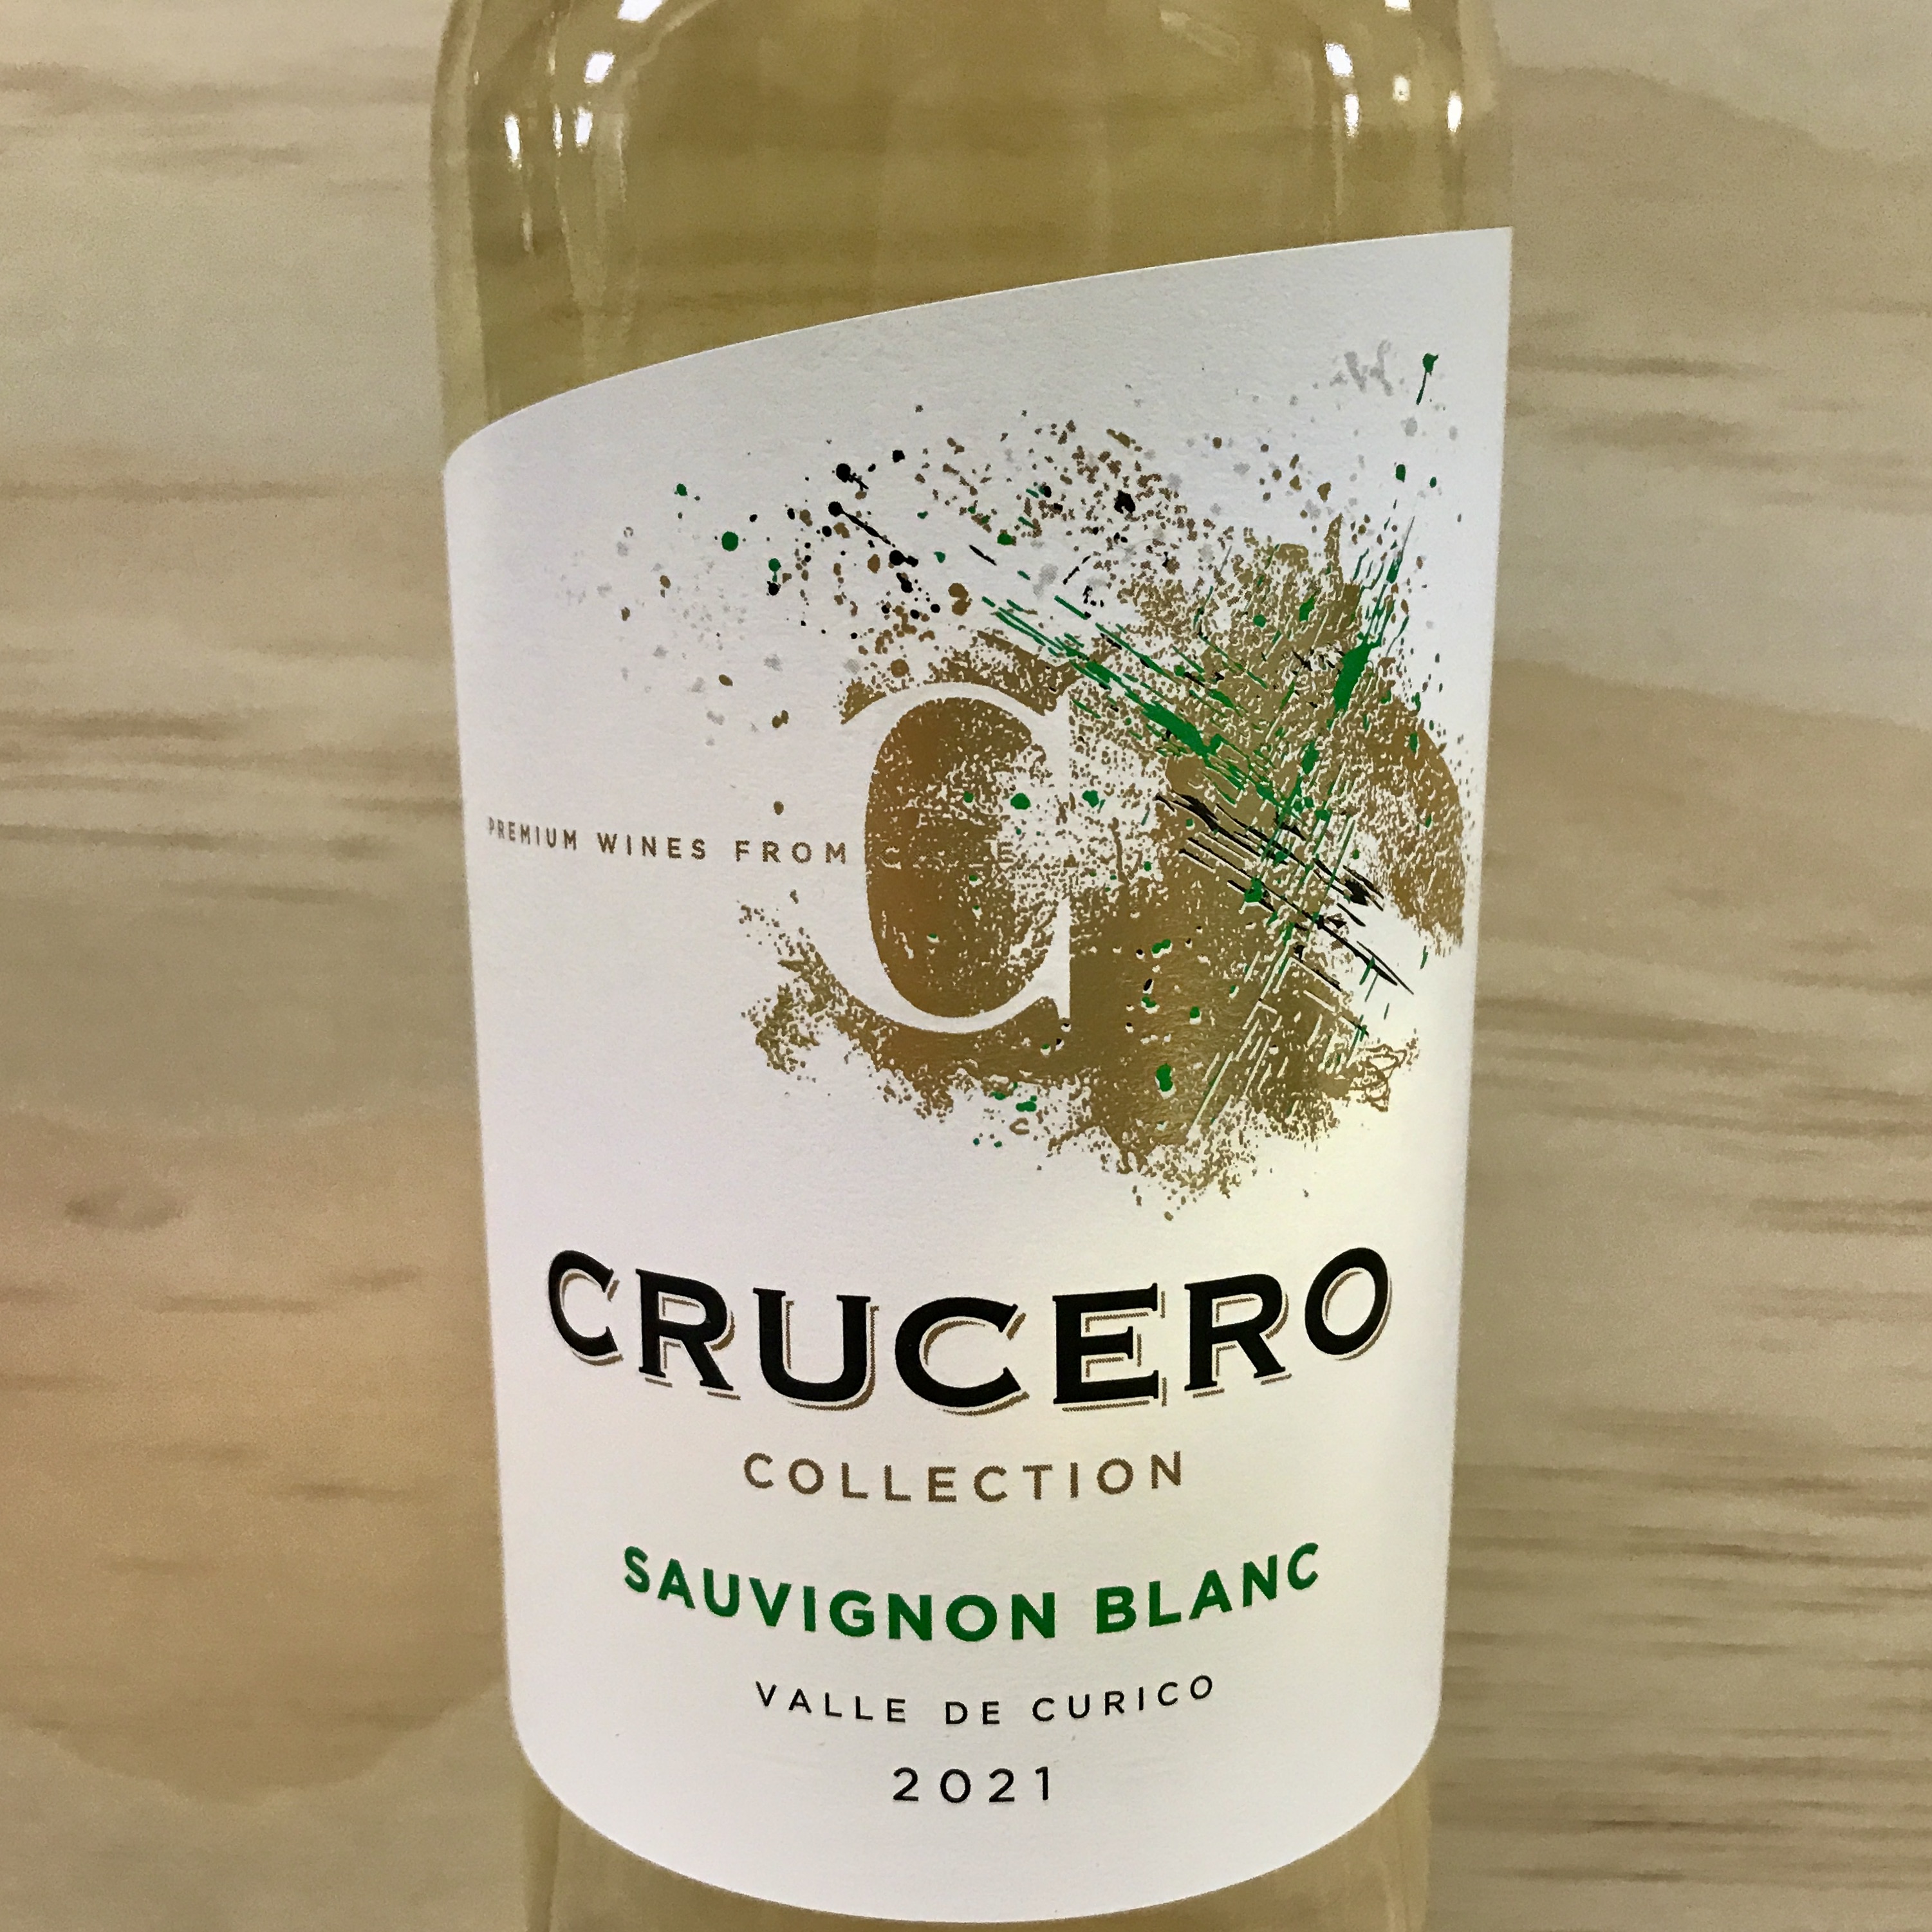 Siegel Crucero Collection Sauvignon Blanc 2021